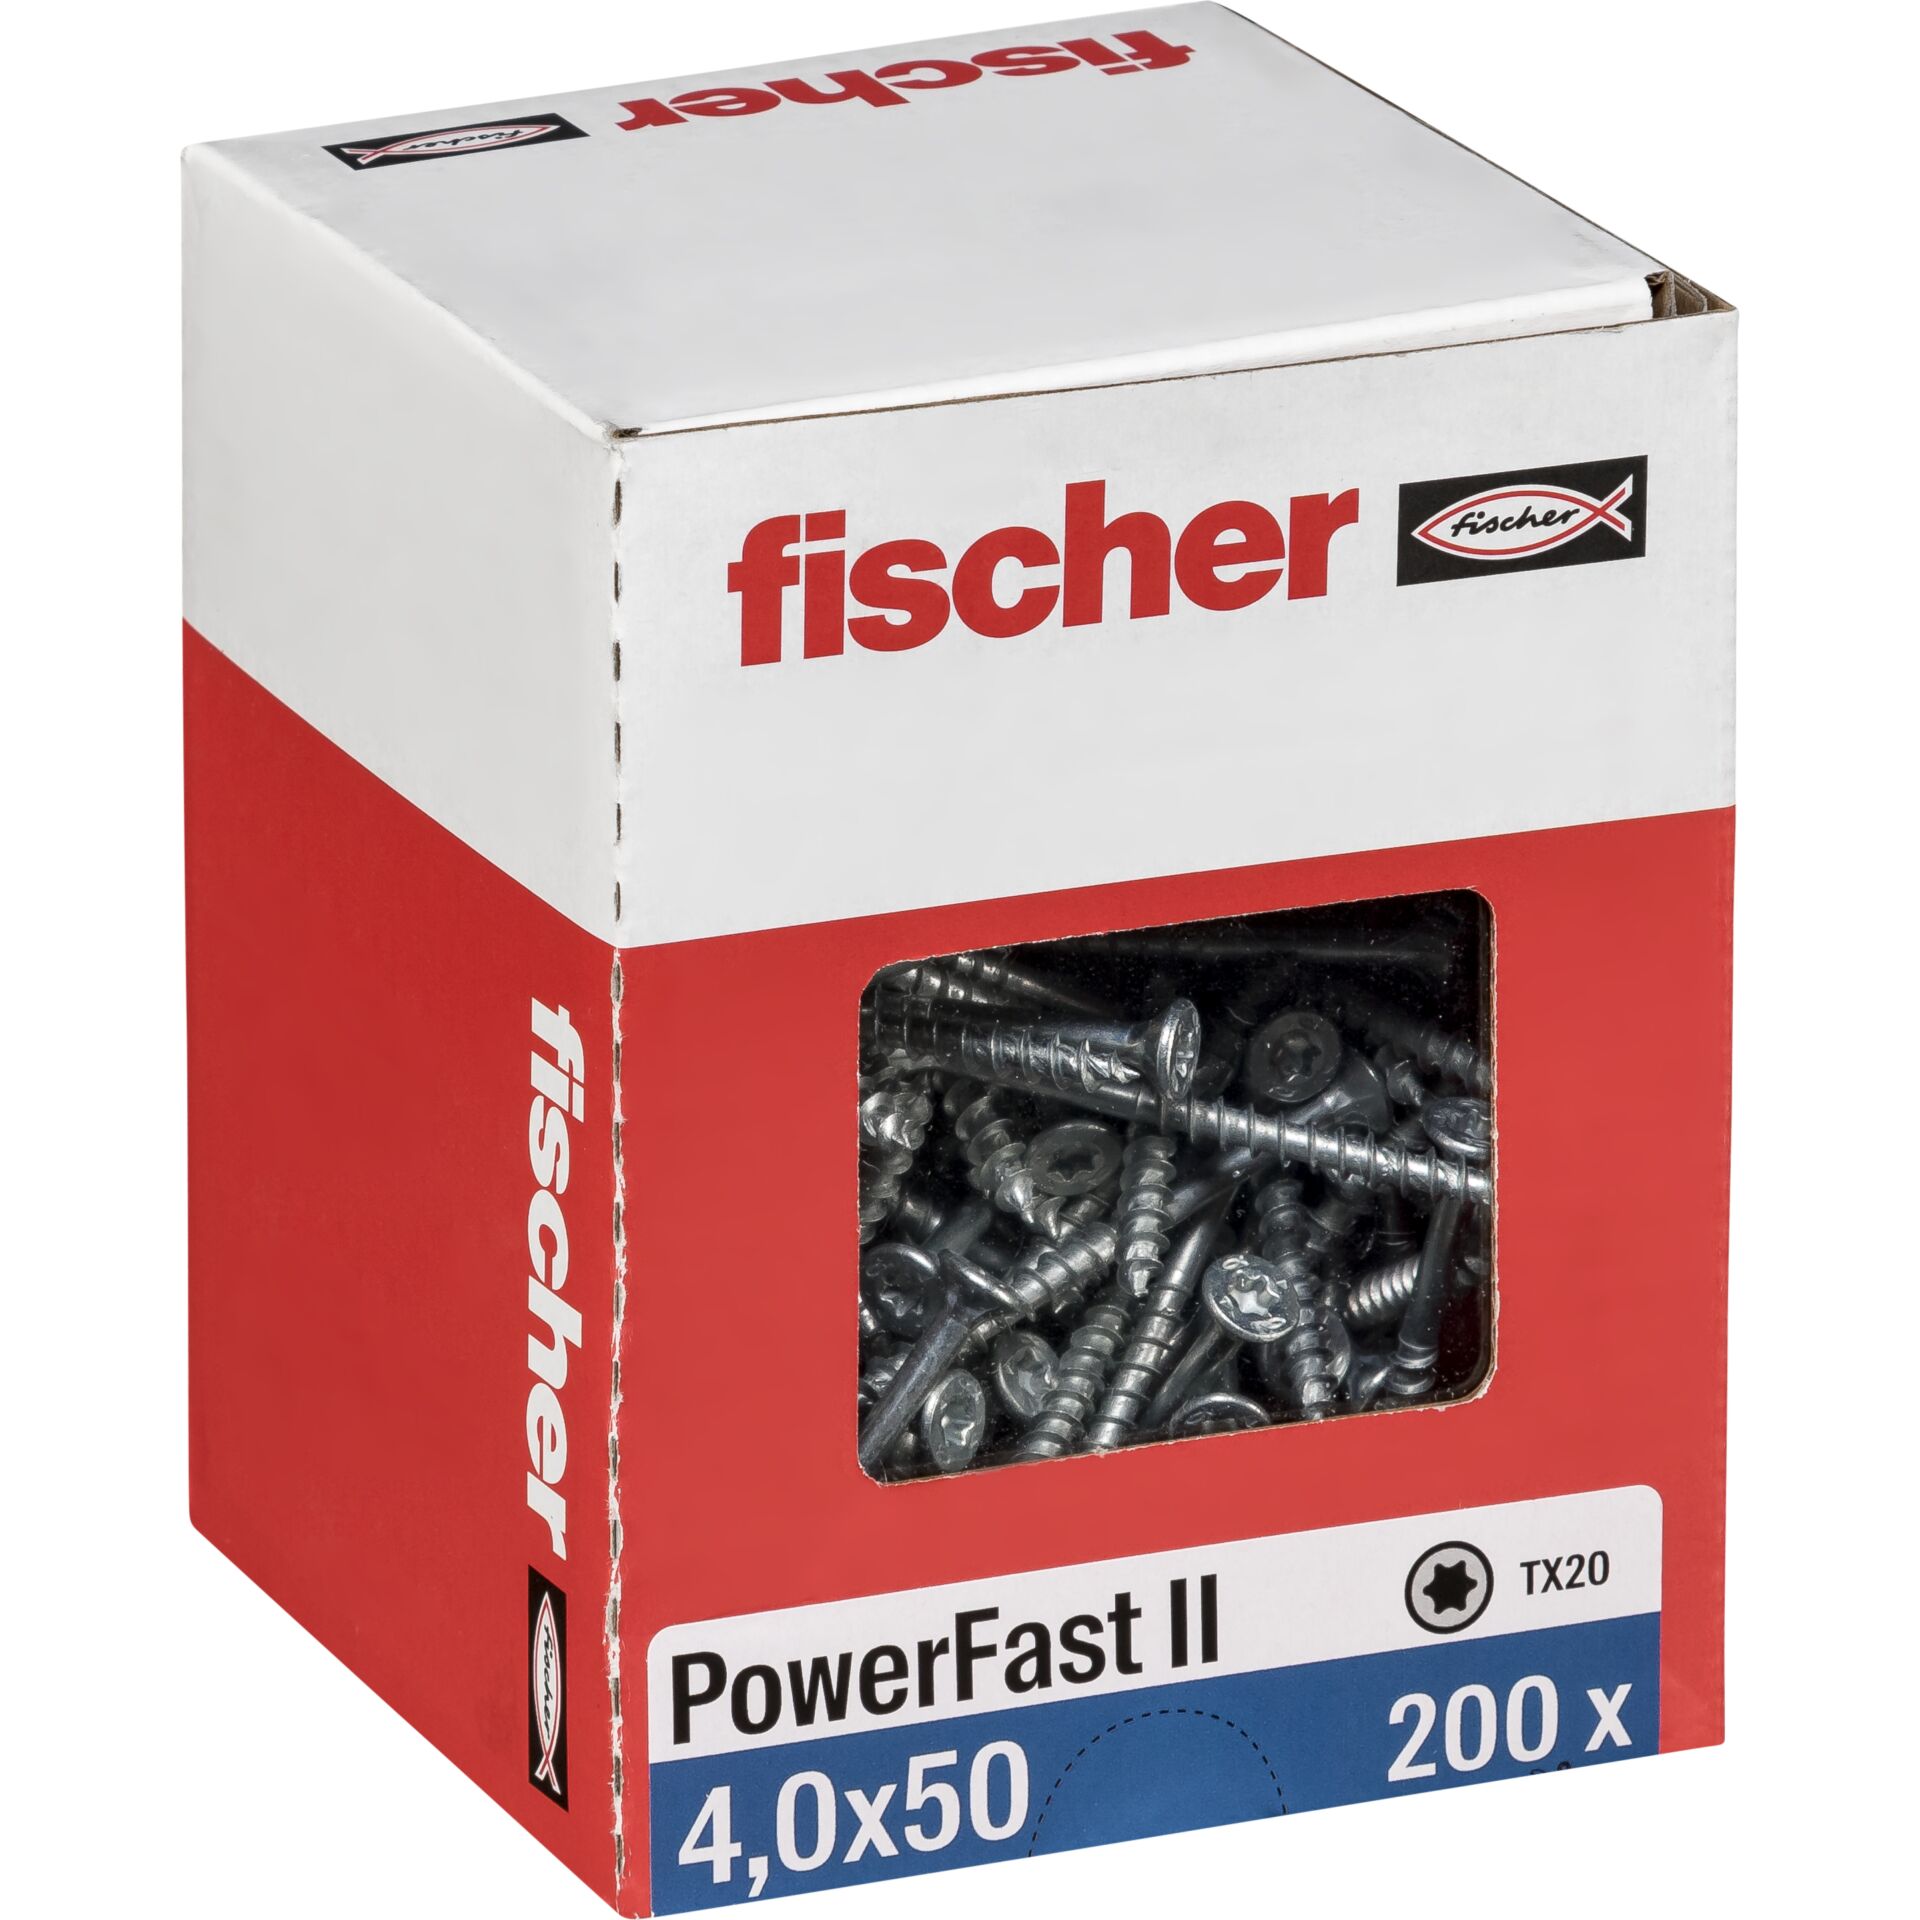 Fischer PowerFast II 4,0x50 SK TX TG blvz 200